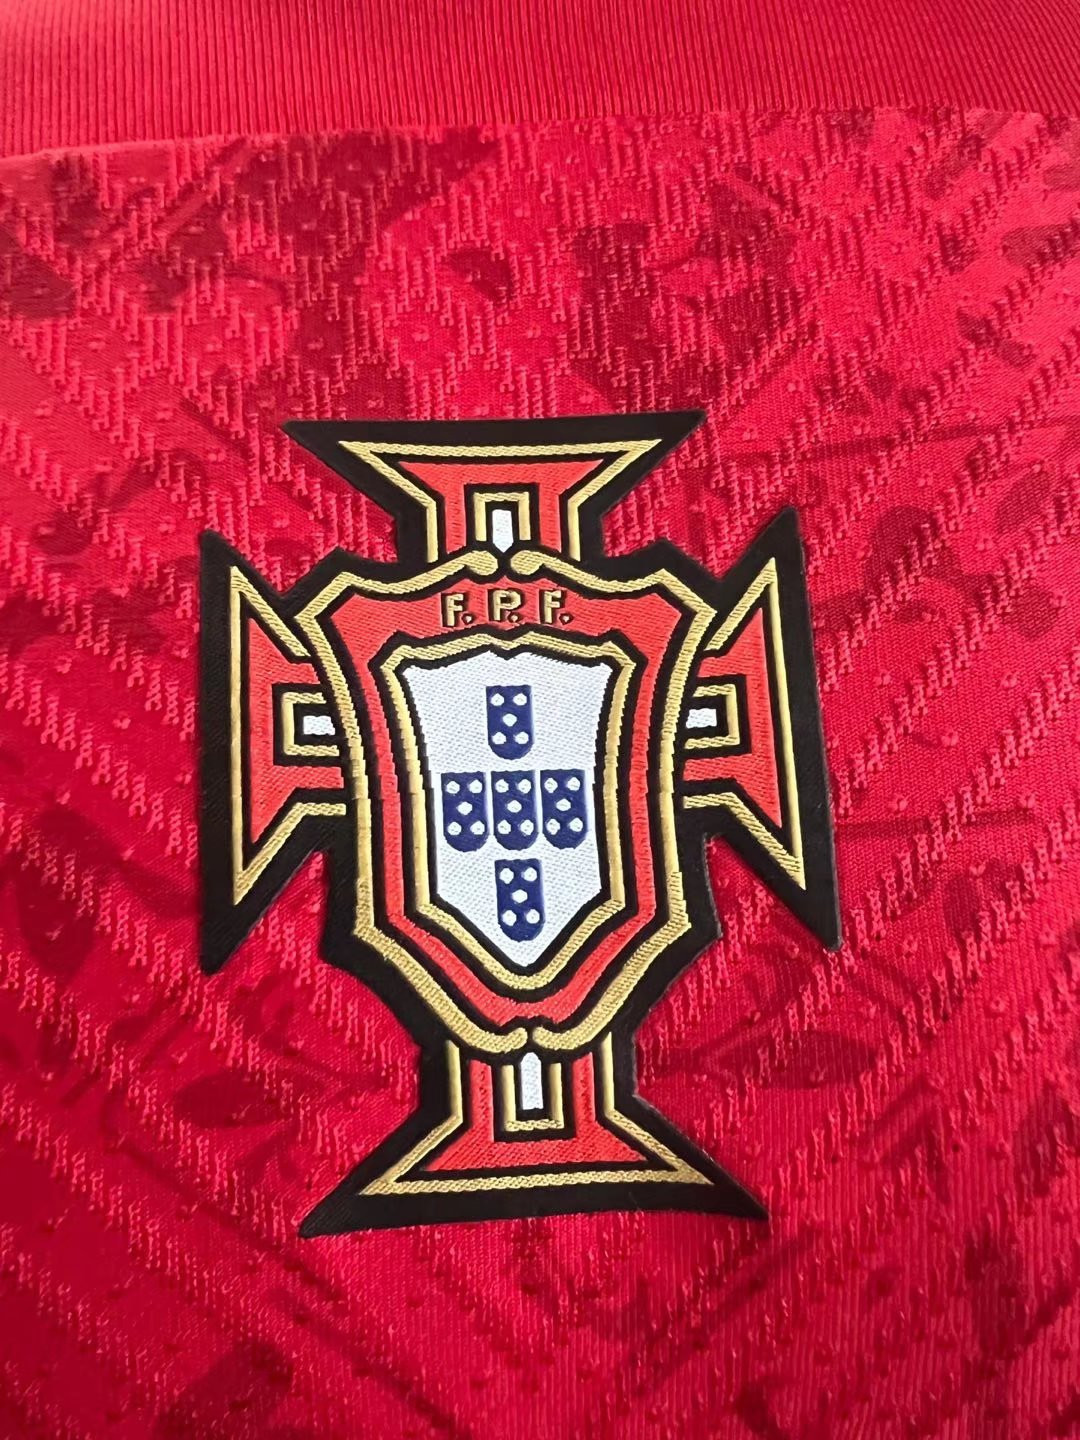 Portugal Soccer Training Jersey Replica Pre-Match Red Mens 2022 (Match)